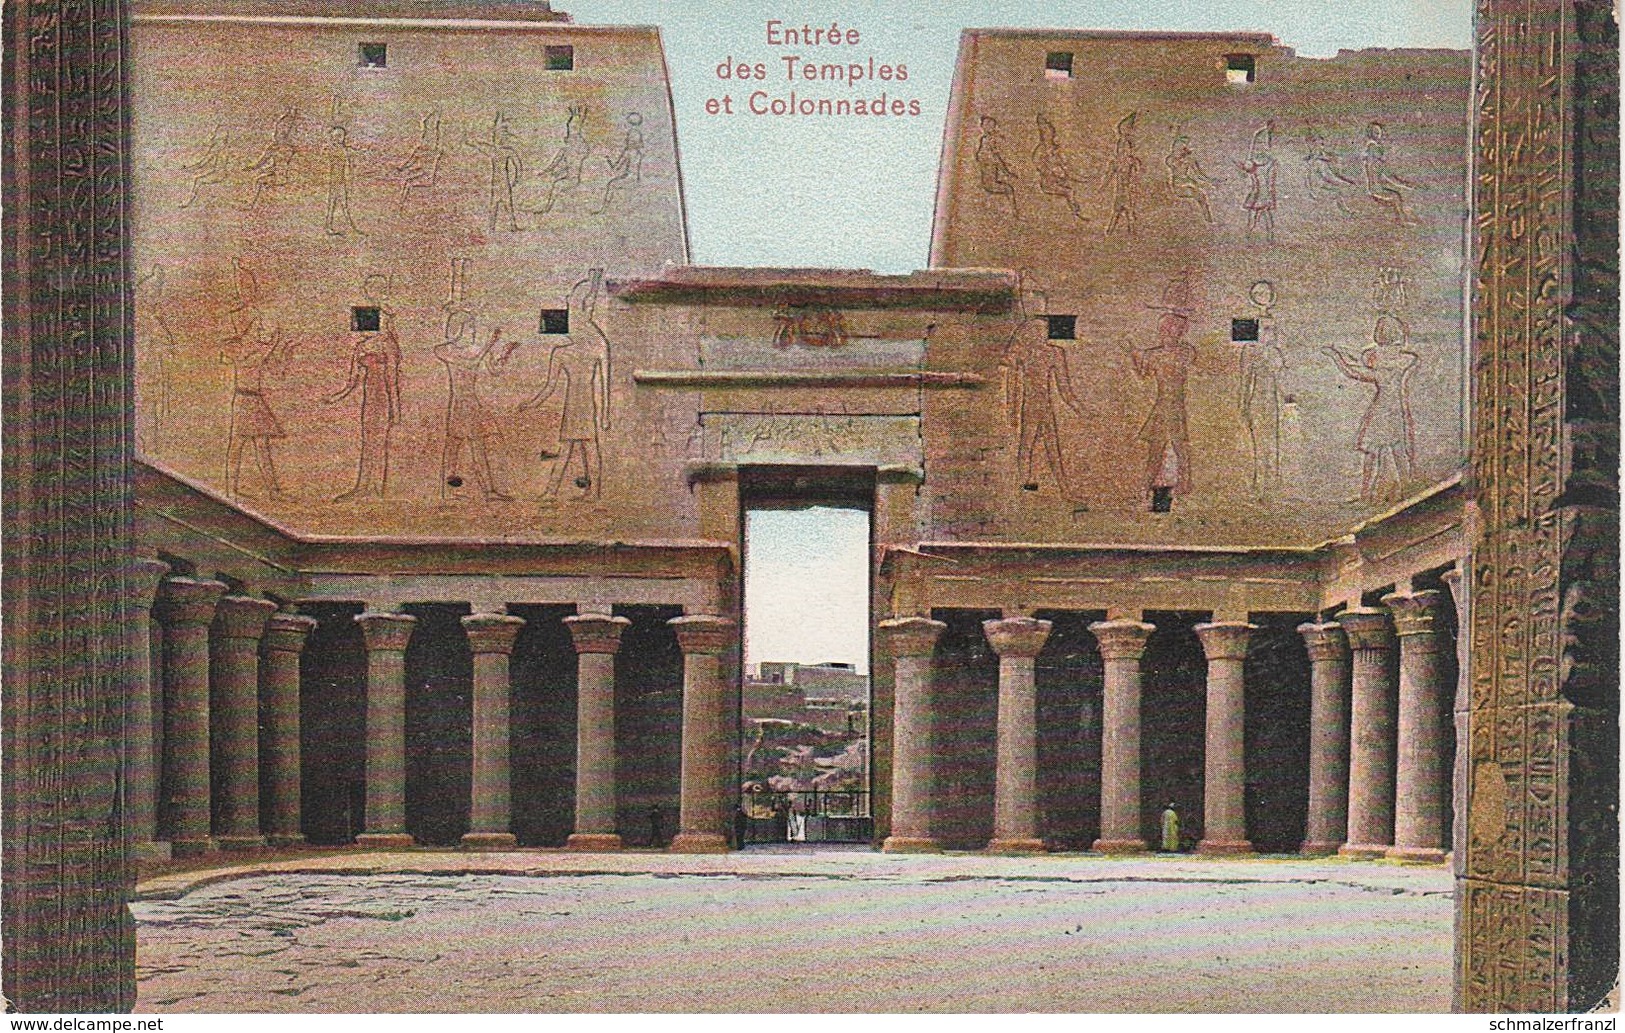 CPA AK Denderak Dendera دندرة Entrée Colonnades Temple معبد A Qina Qena قنا Ägypten Egypt مصر Egypte - Qena